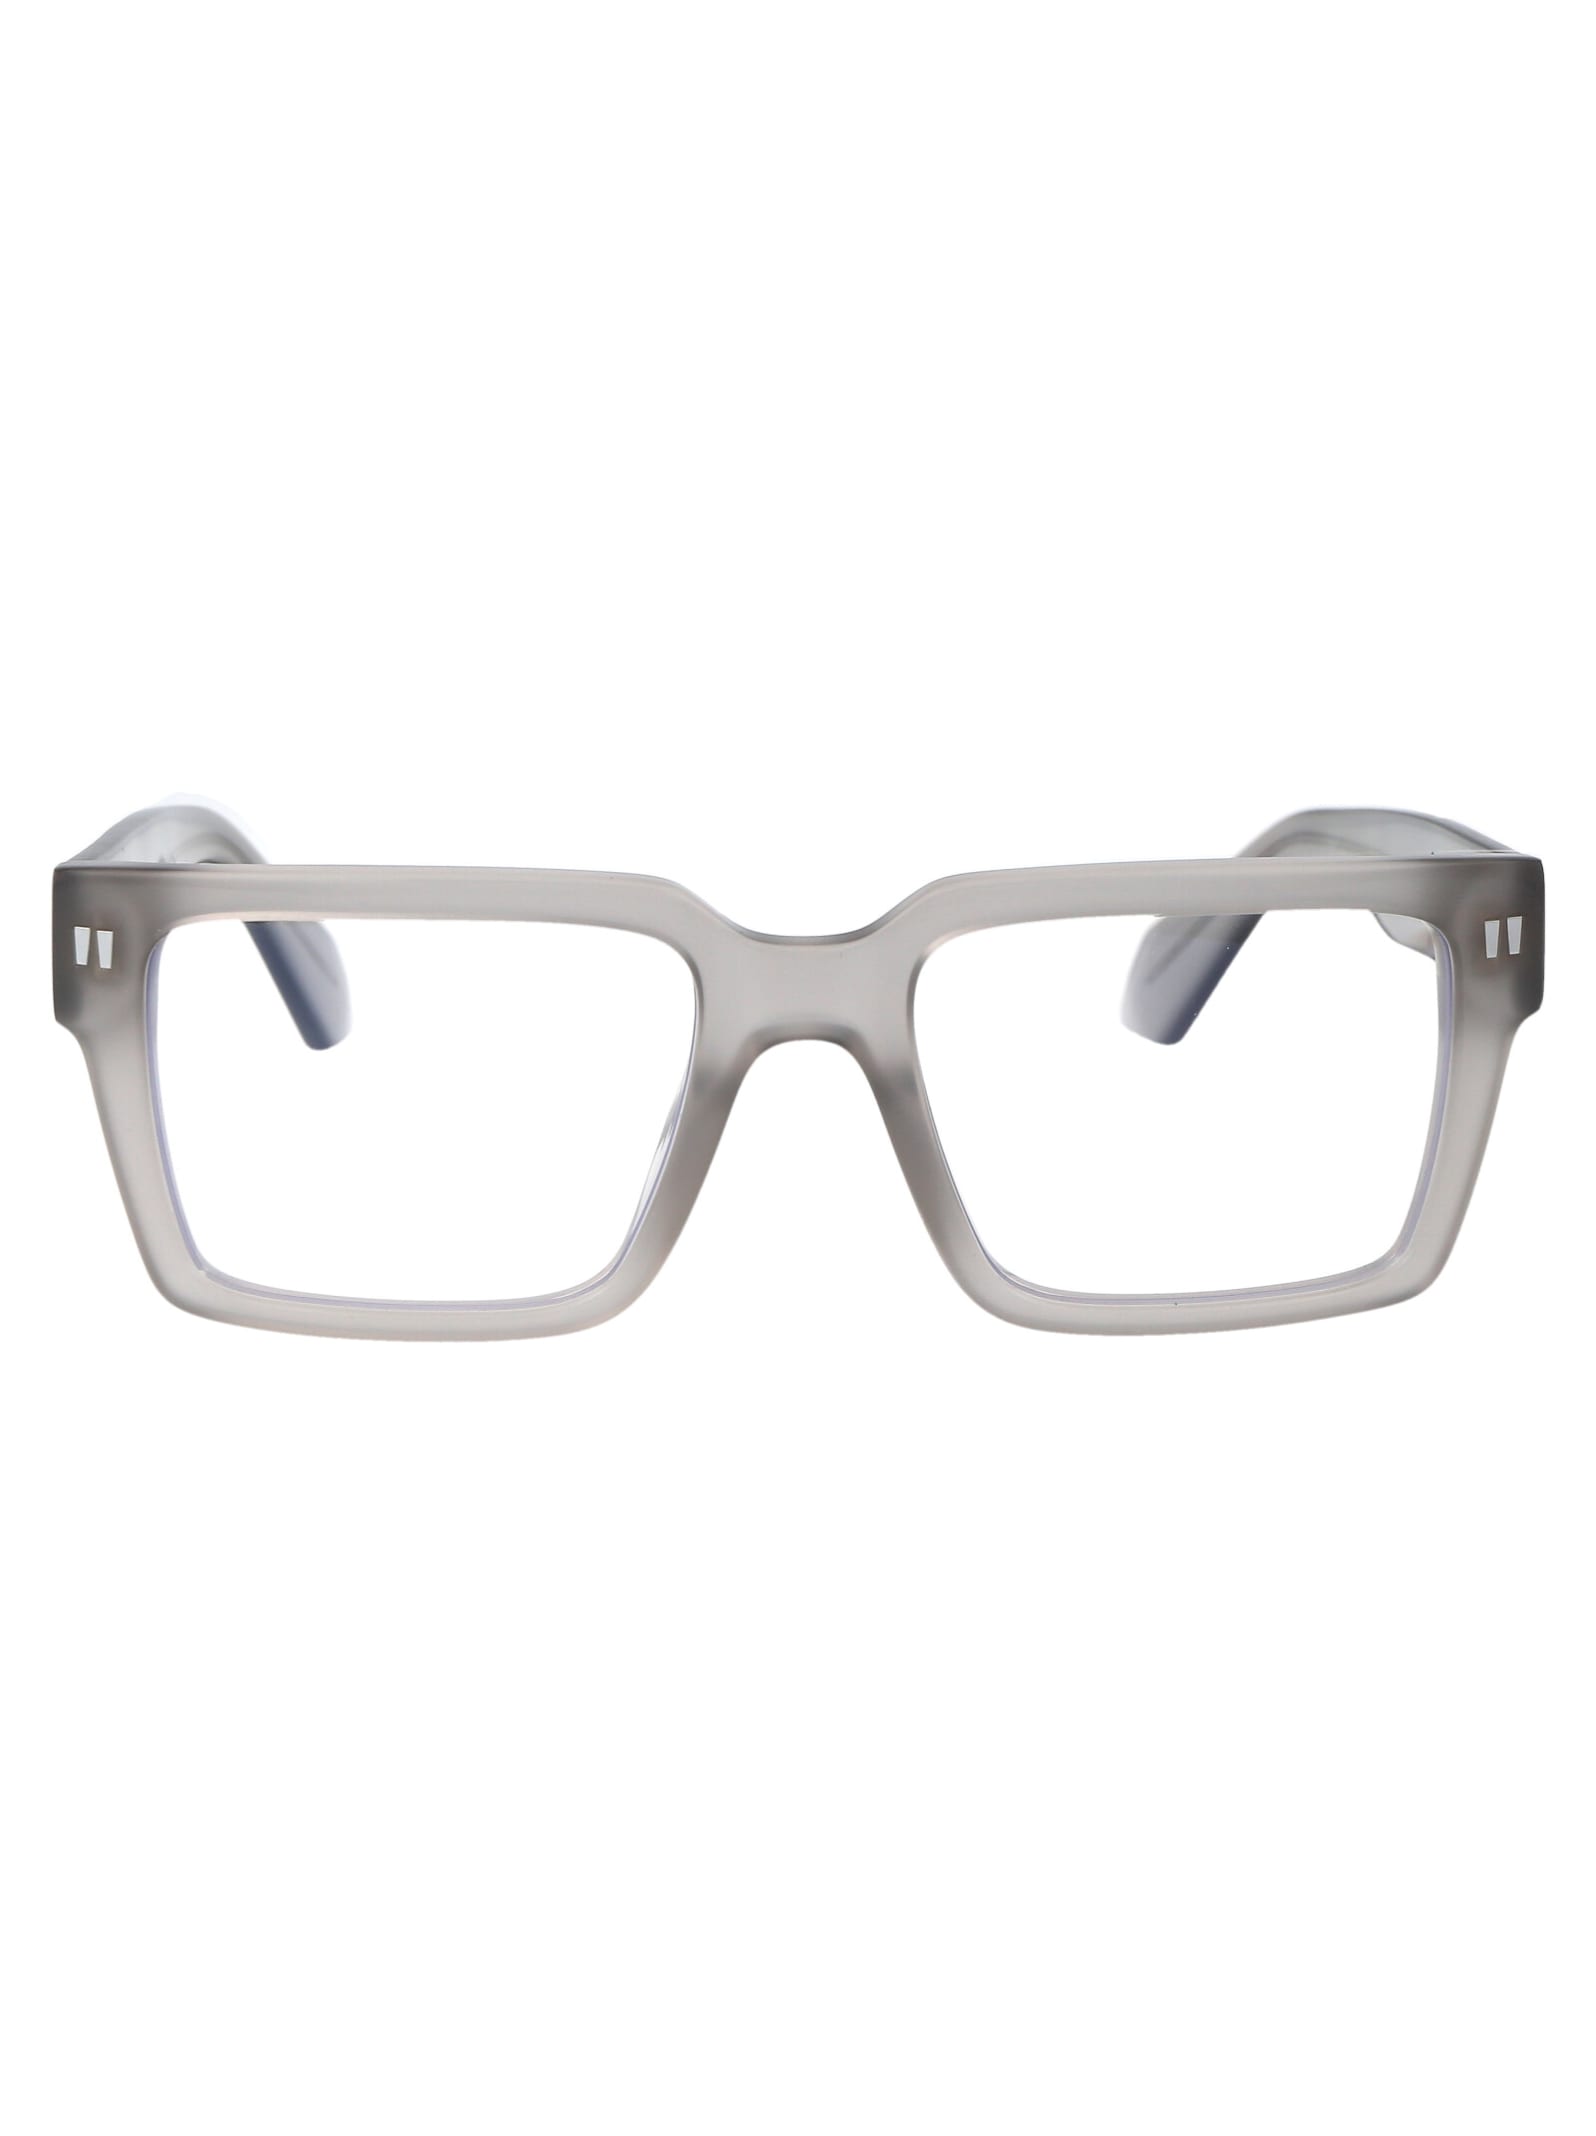 Optical Style 54 Glasses